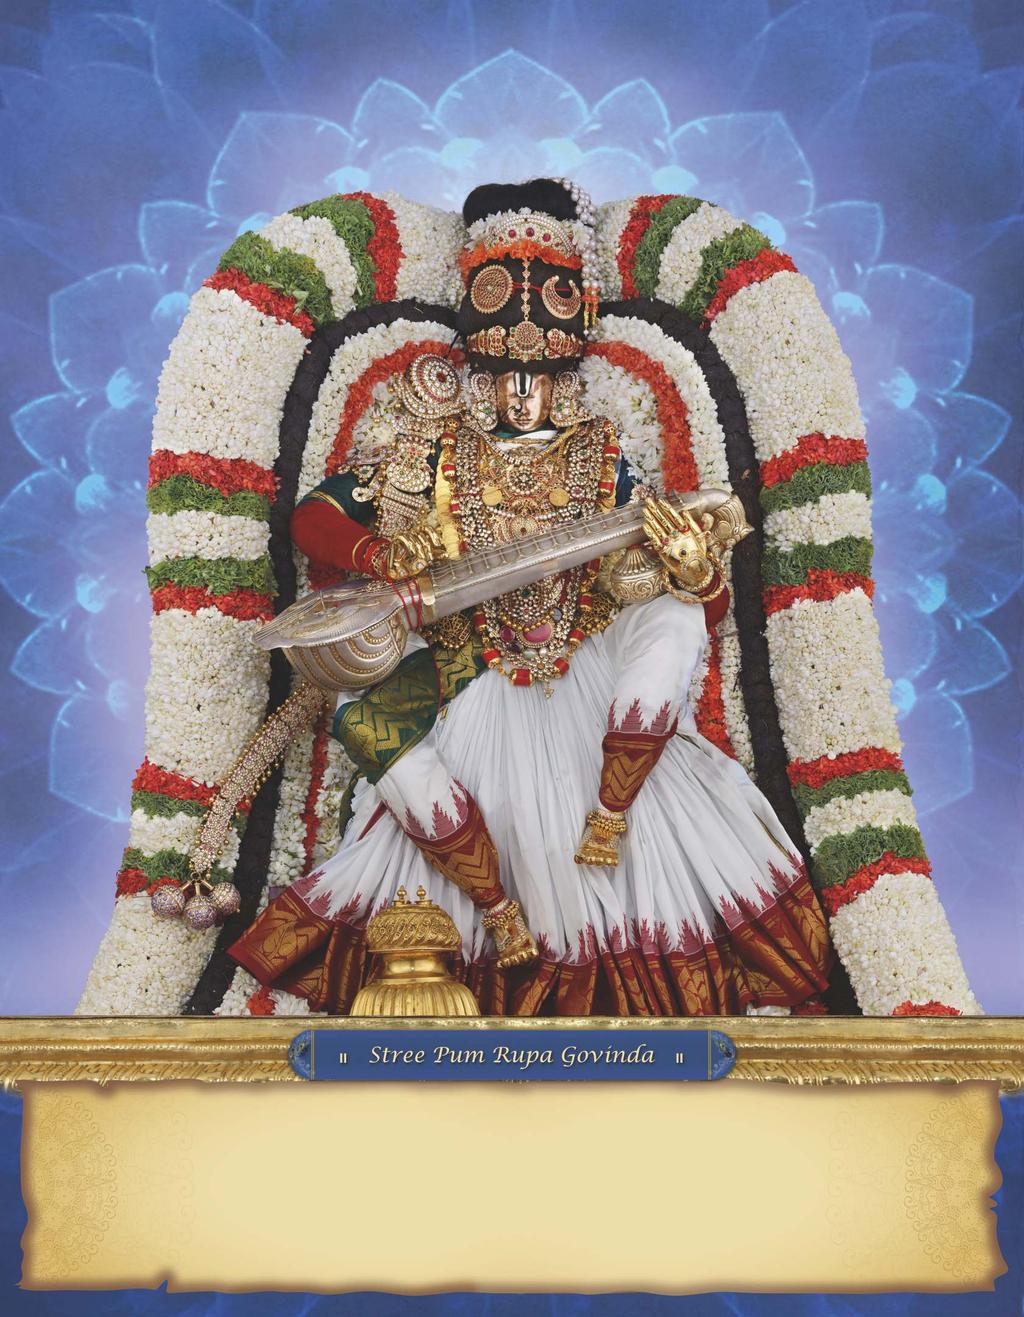 Tirumala Devasthanams Sri Malayappa Swamivaru in the form of Goddess Saraswathi, Tirumala October 2018 Mon Tue Wed Thu Fri Sat Sun Mon Tue Wed Thu Fri Sat Sun Mon Tue Wed 18 19 20 21 22 23 24 25 26